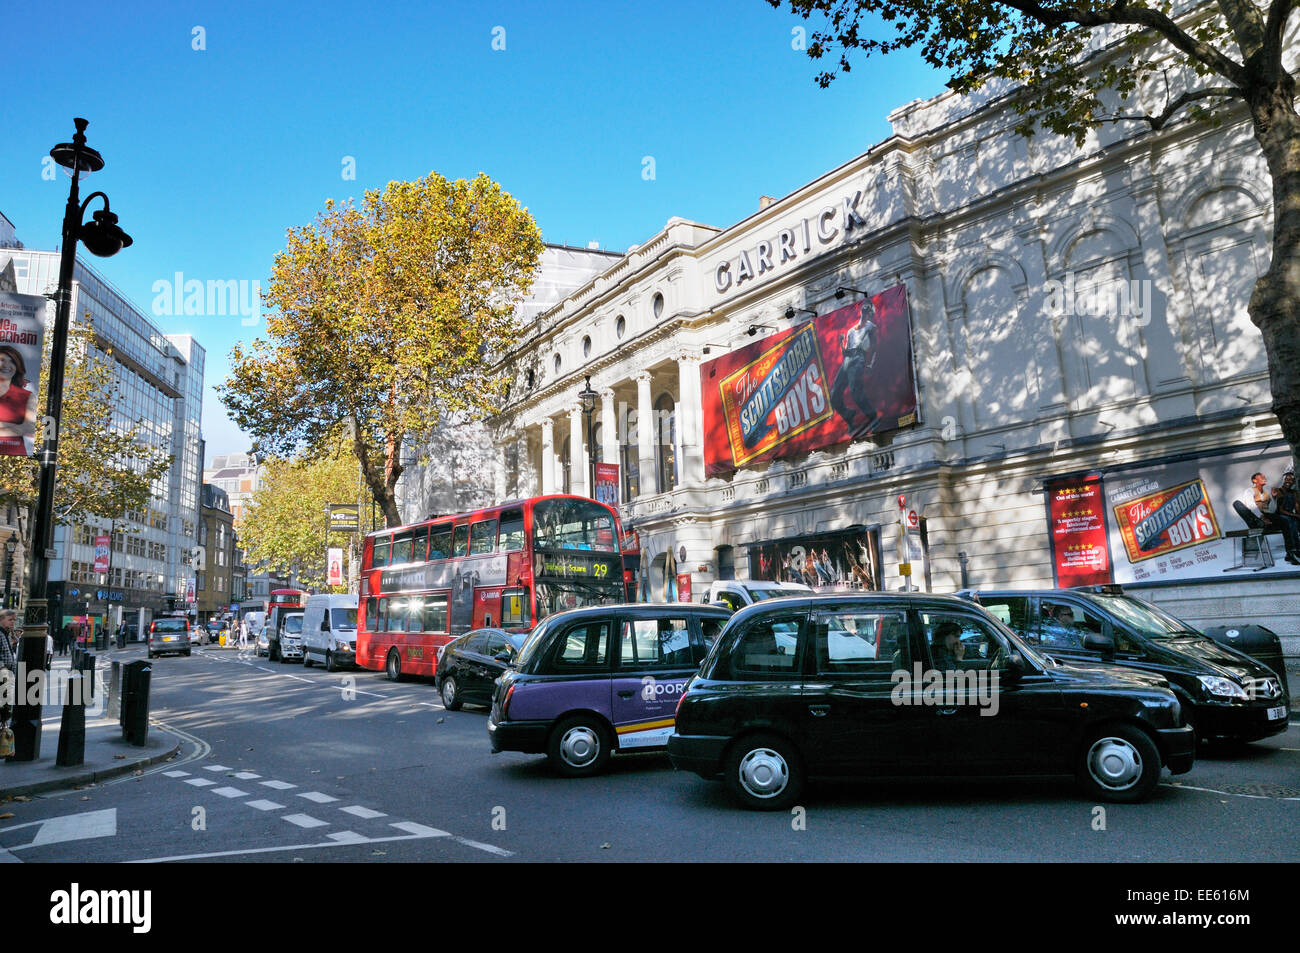 The Garrick Theatre on Charing Cross Road, London, England, UK Stock Photo